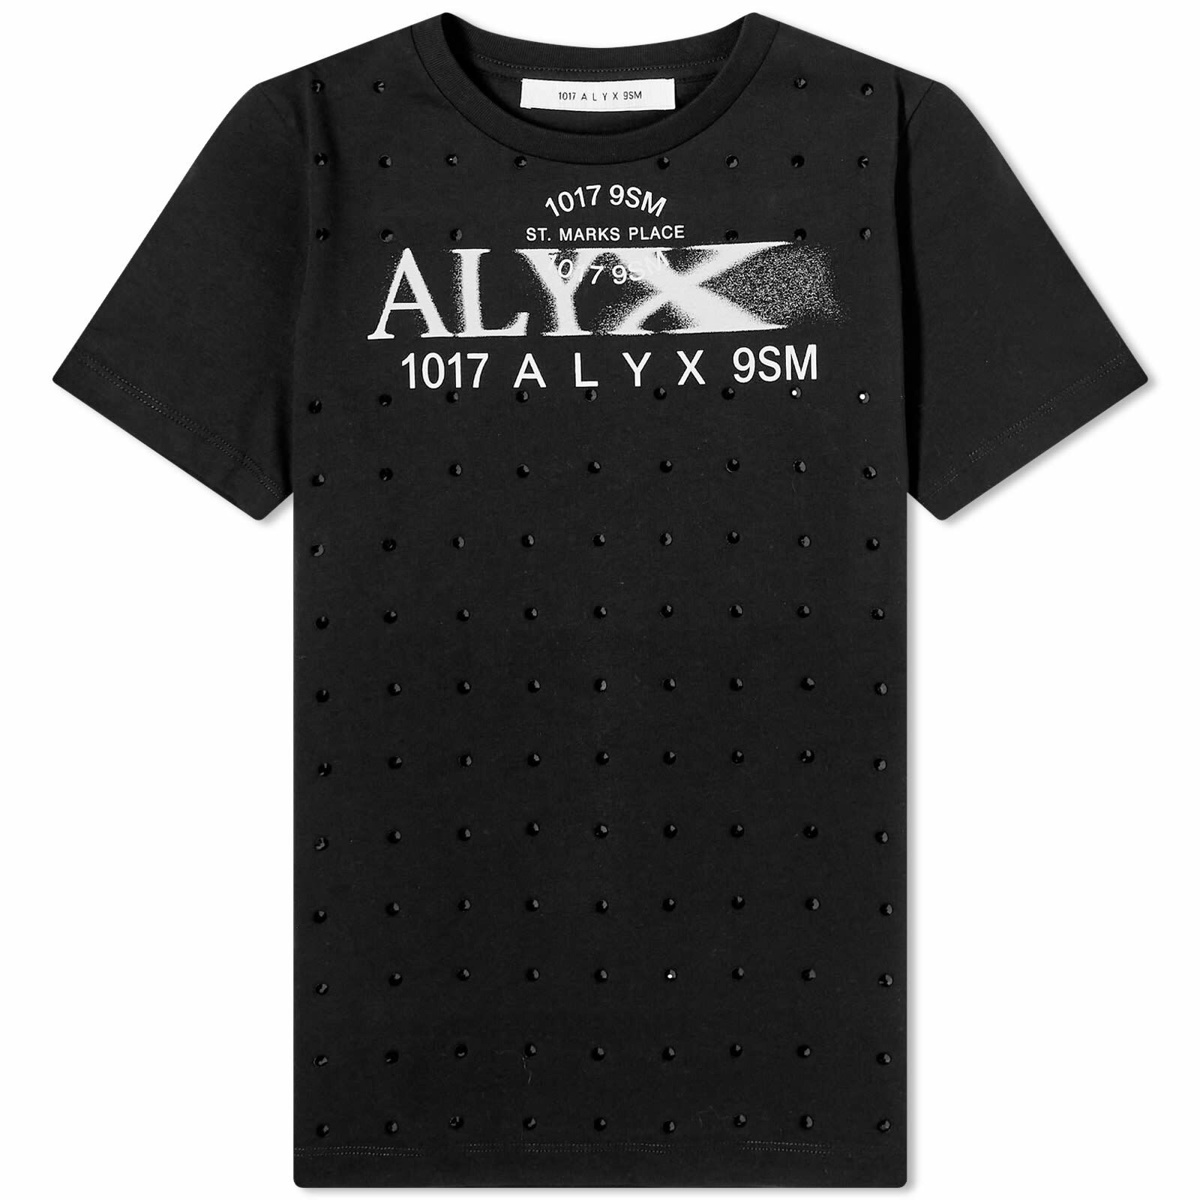 1017 ALYX 9SM Women's Fitted Logo T-Shirt in Black 1017 ALYX 9SM